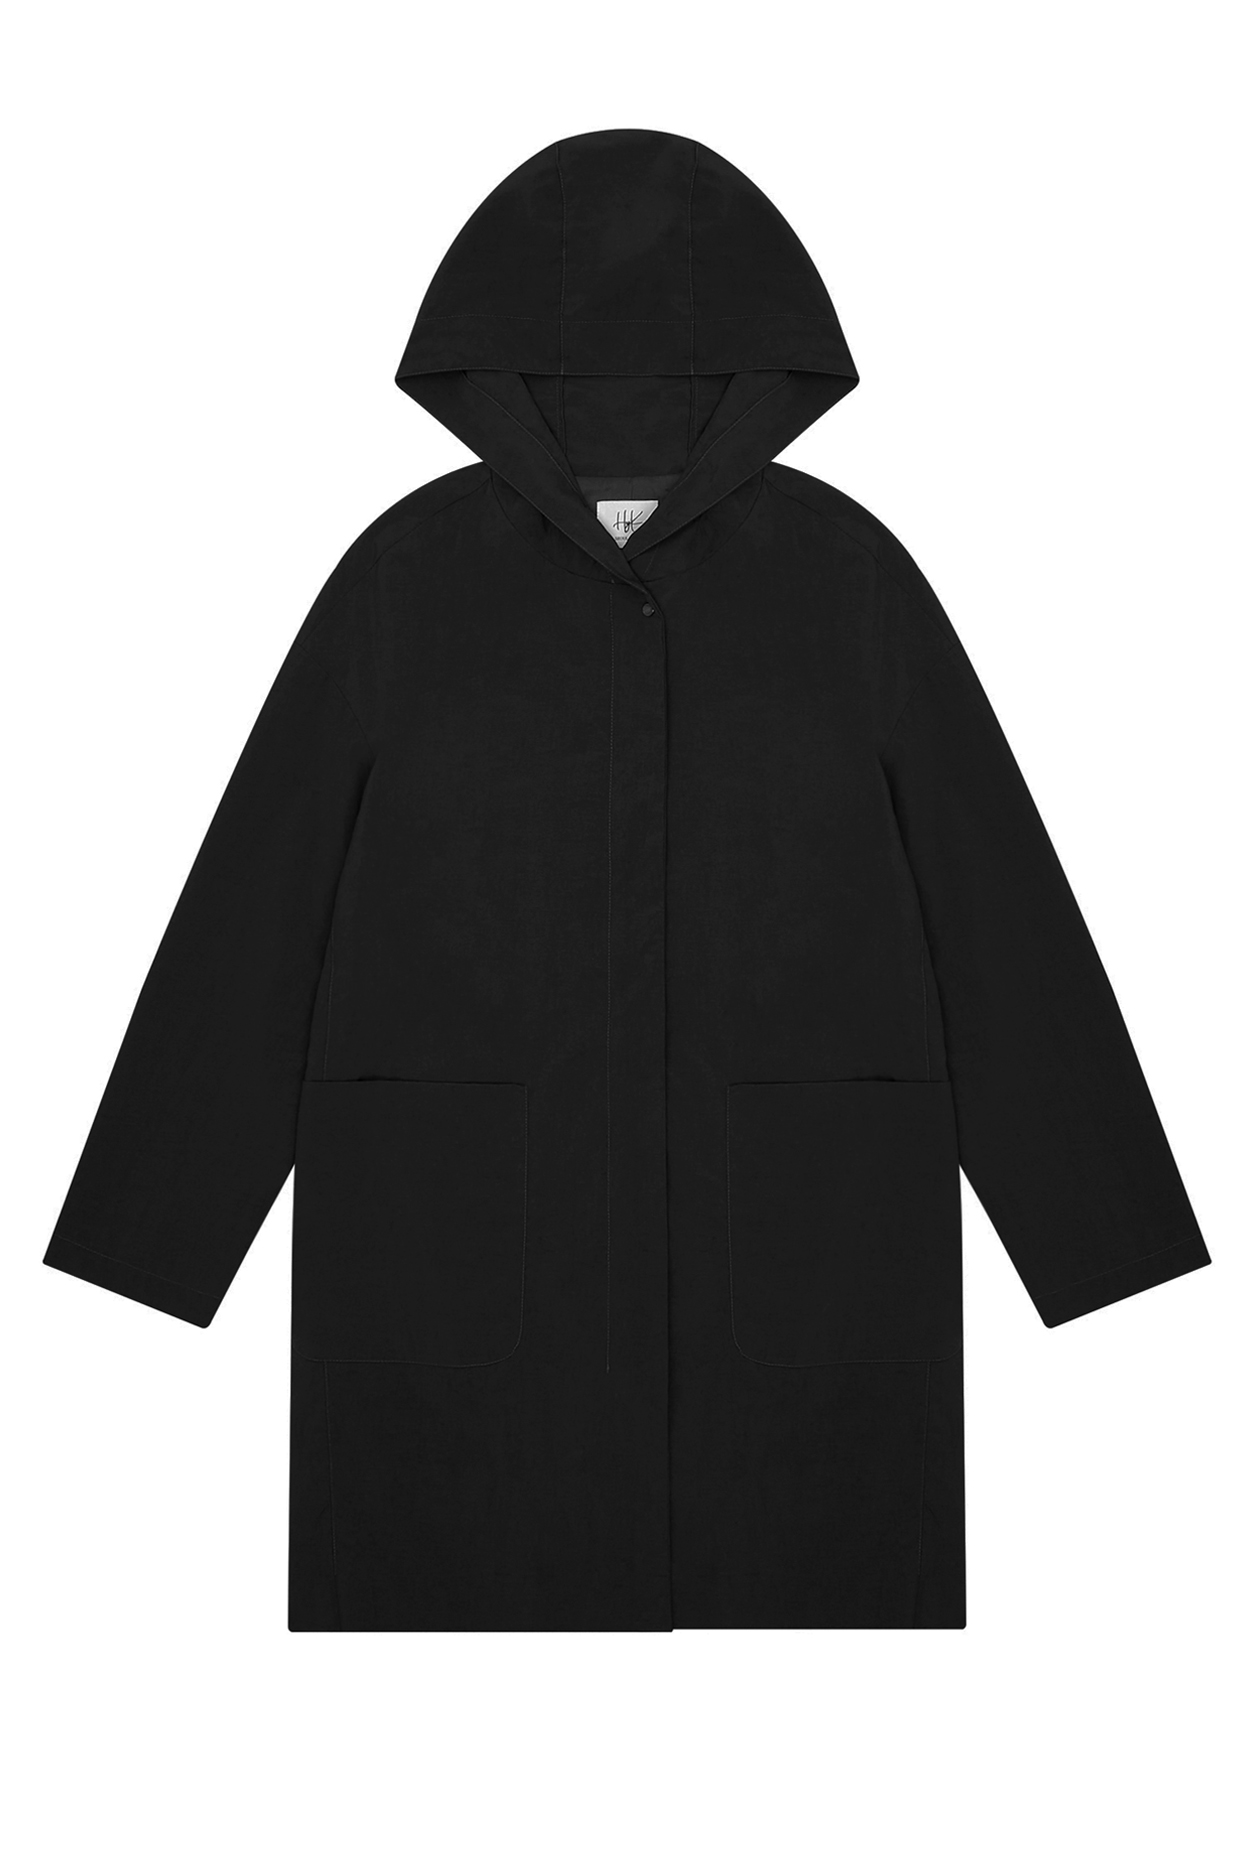 RECYCLED NYLON HOOD JACKET-black, 혜영킴, HYEYEONG KIM designer brand